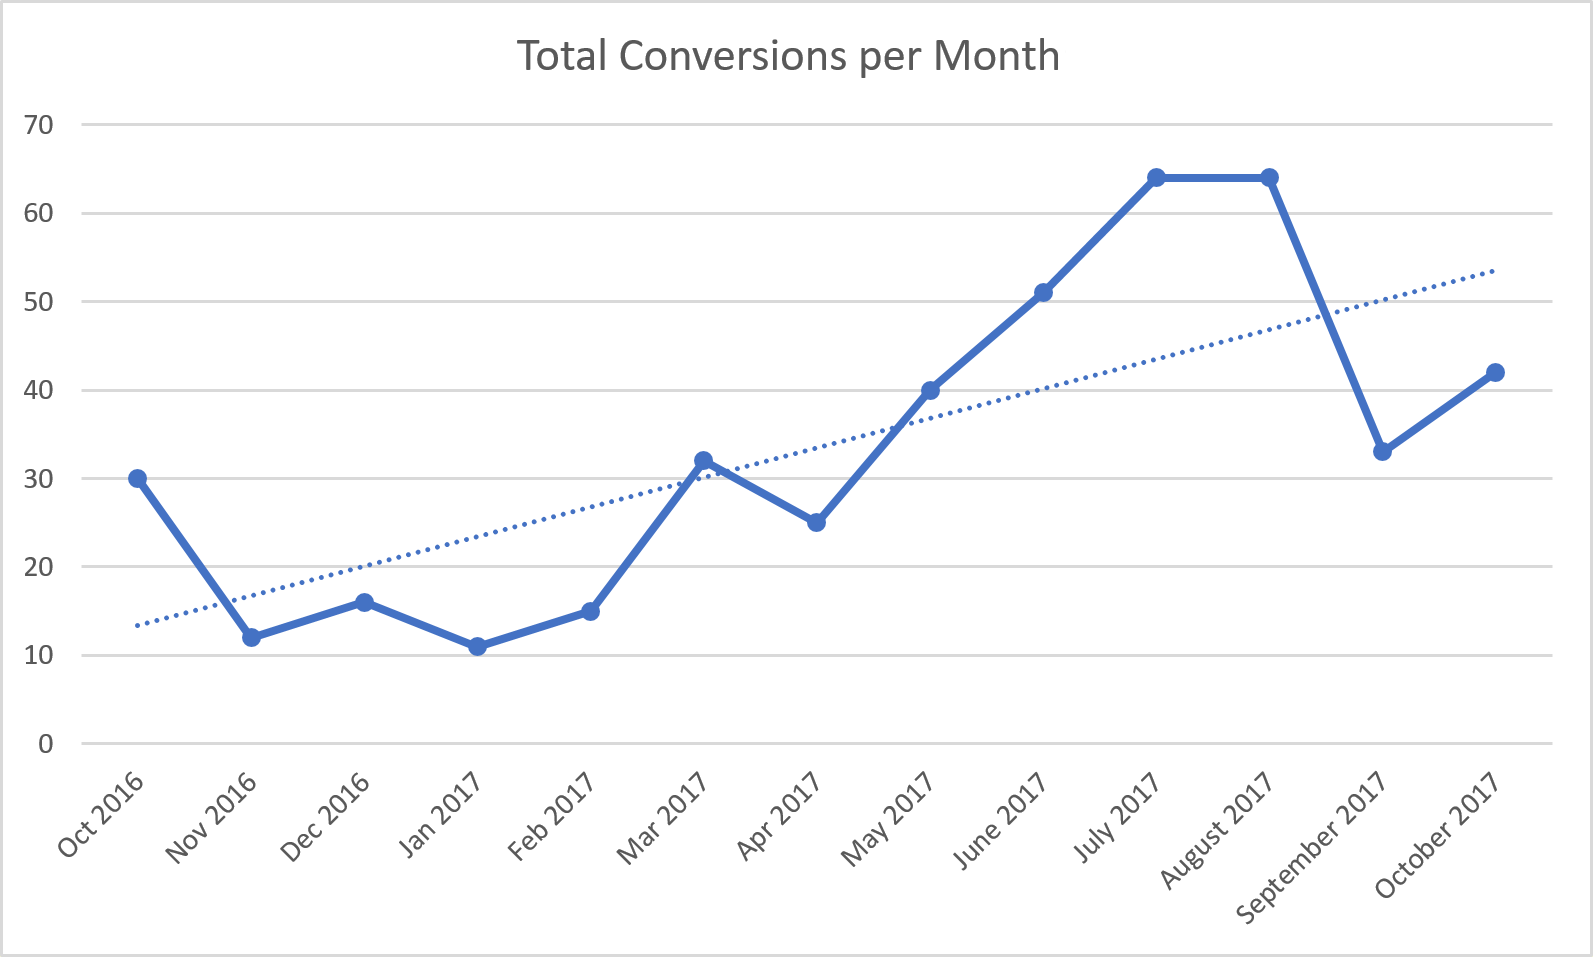 Conversions per month